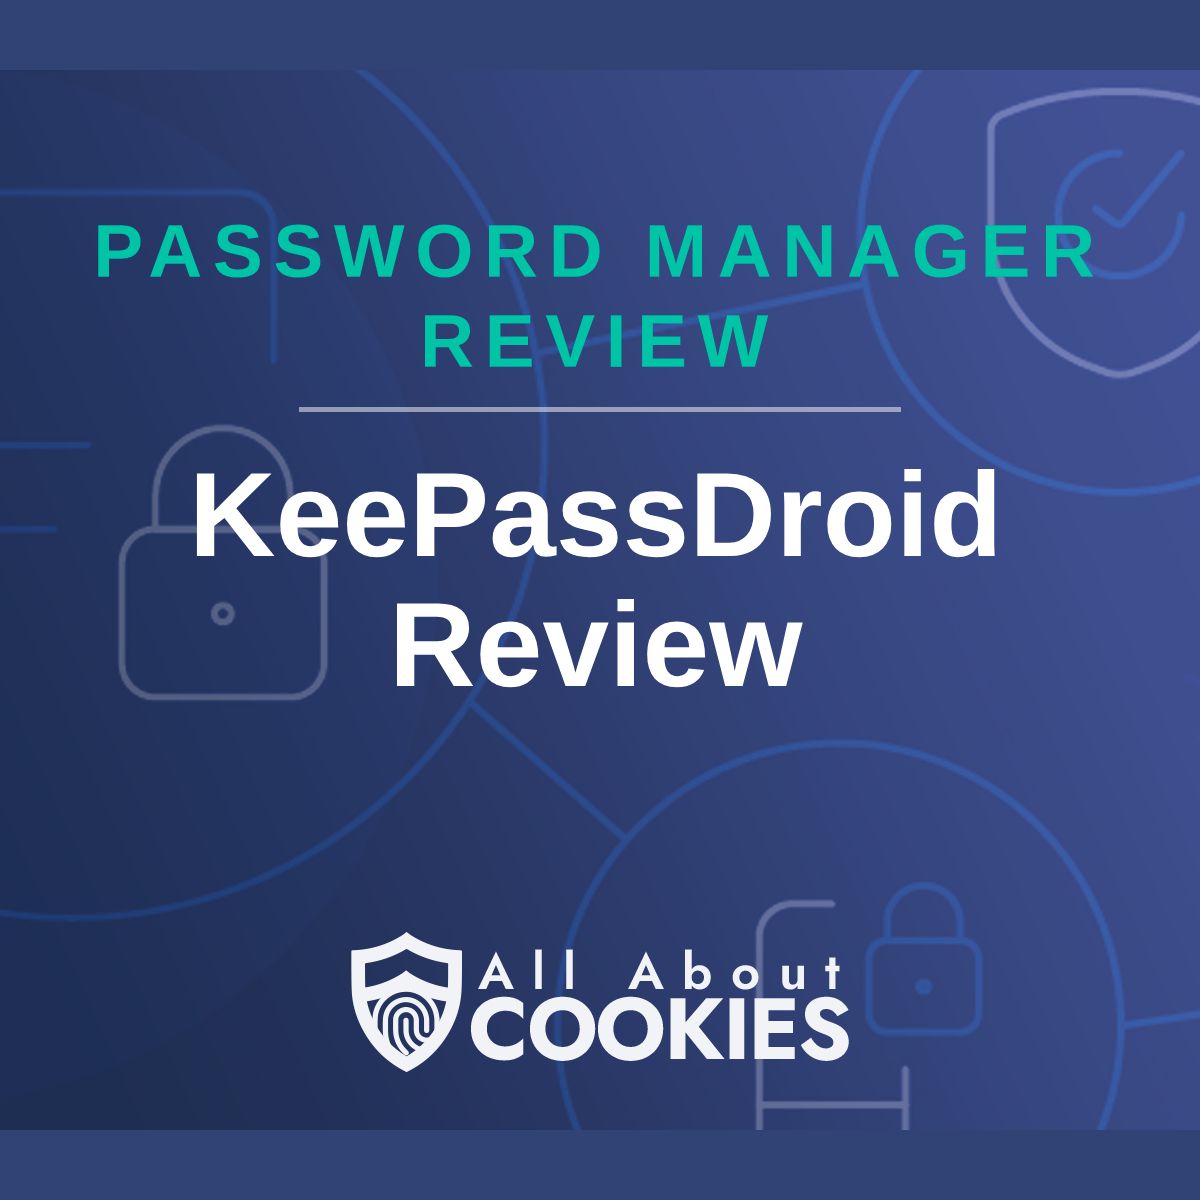 KeePassDroid Review